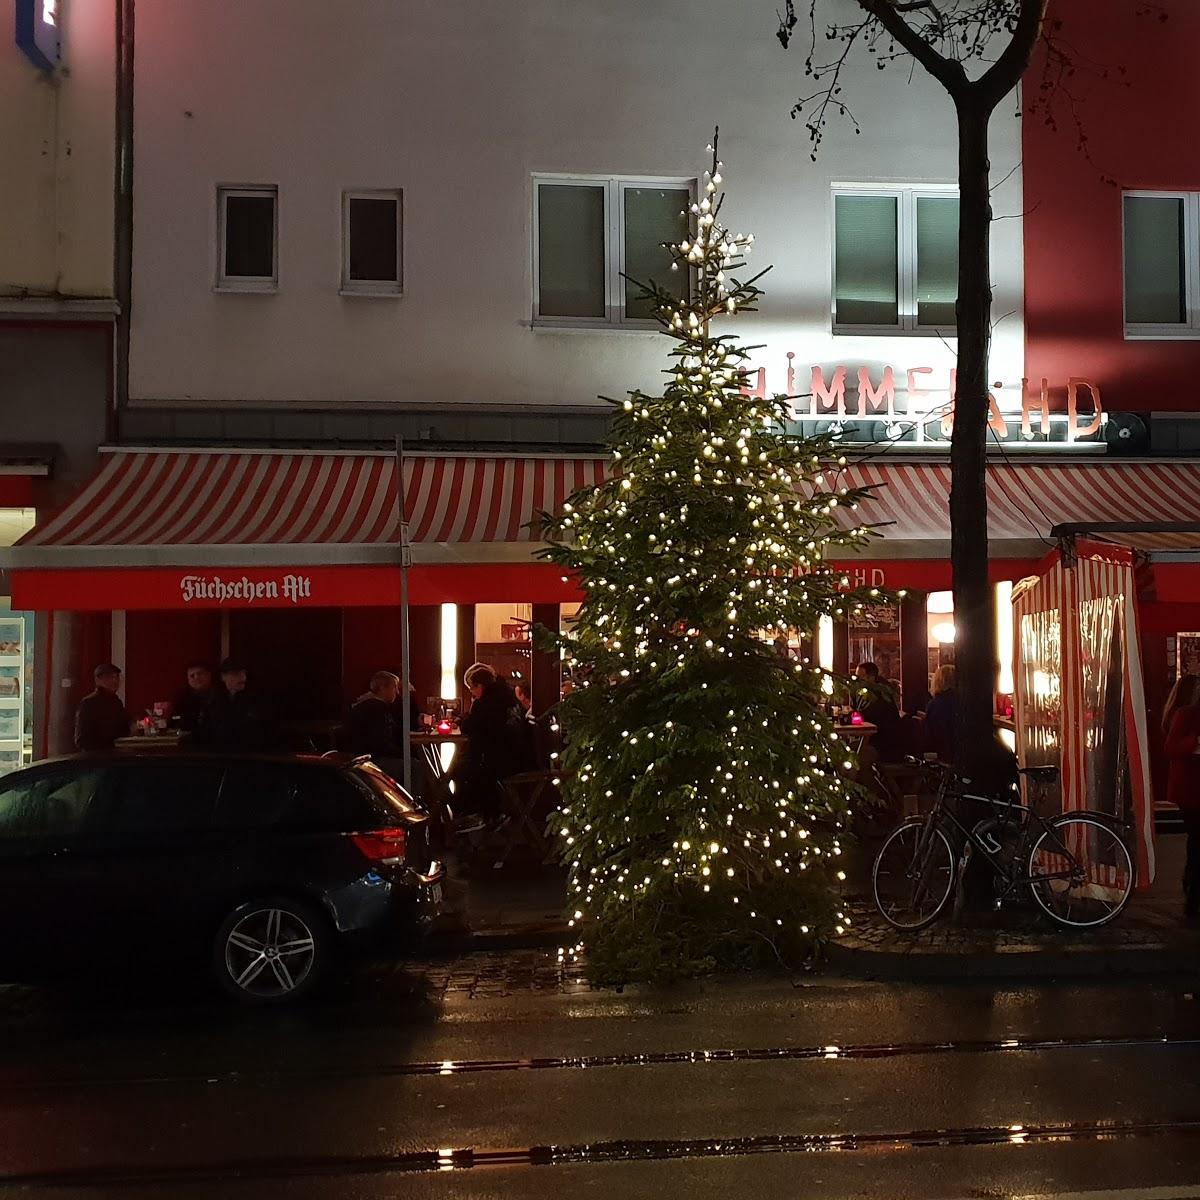 Restaurant "Himmel & Ähd" in Düsseldorf